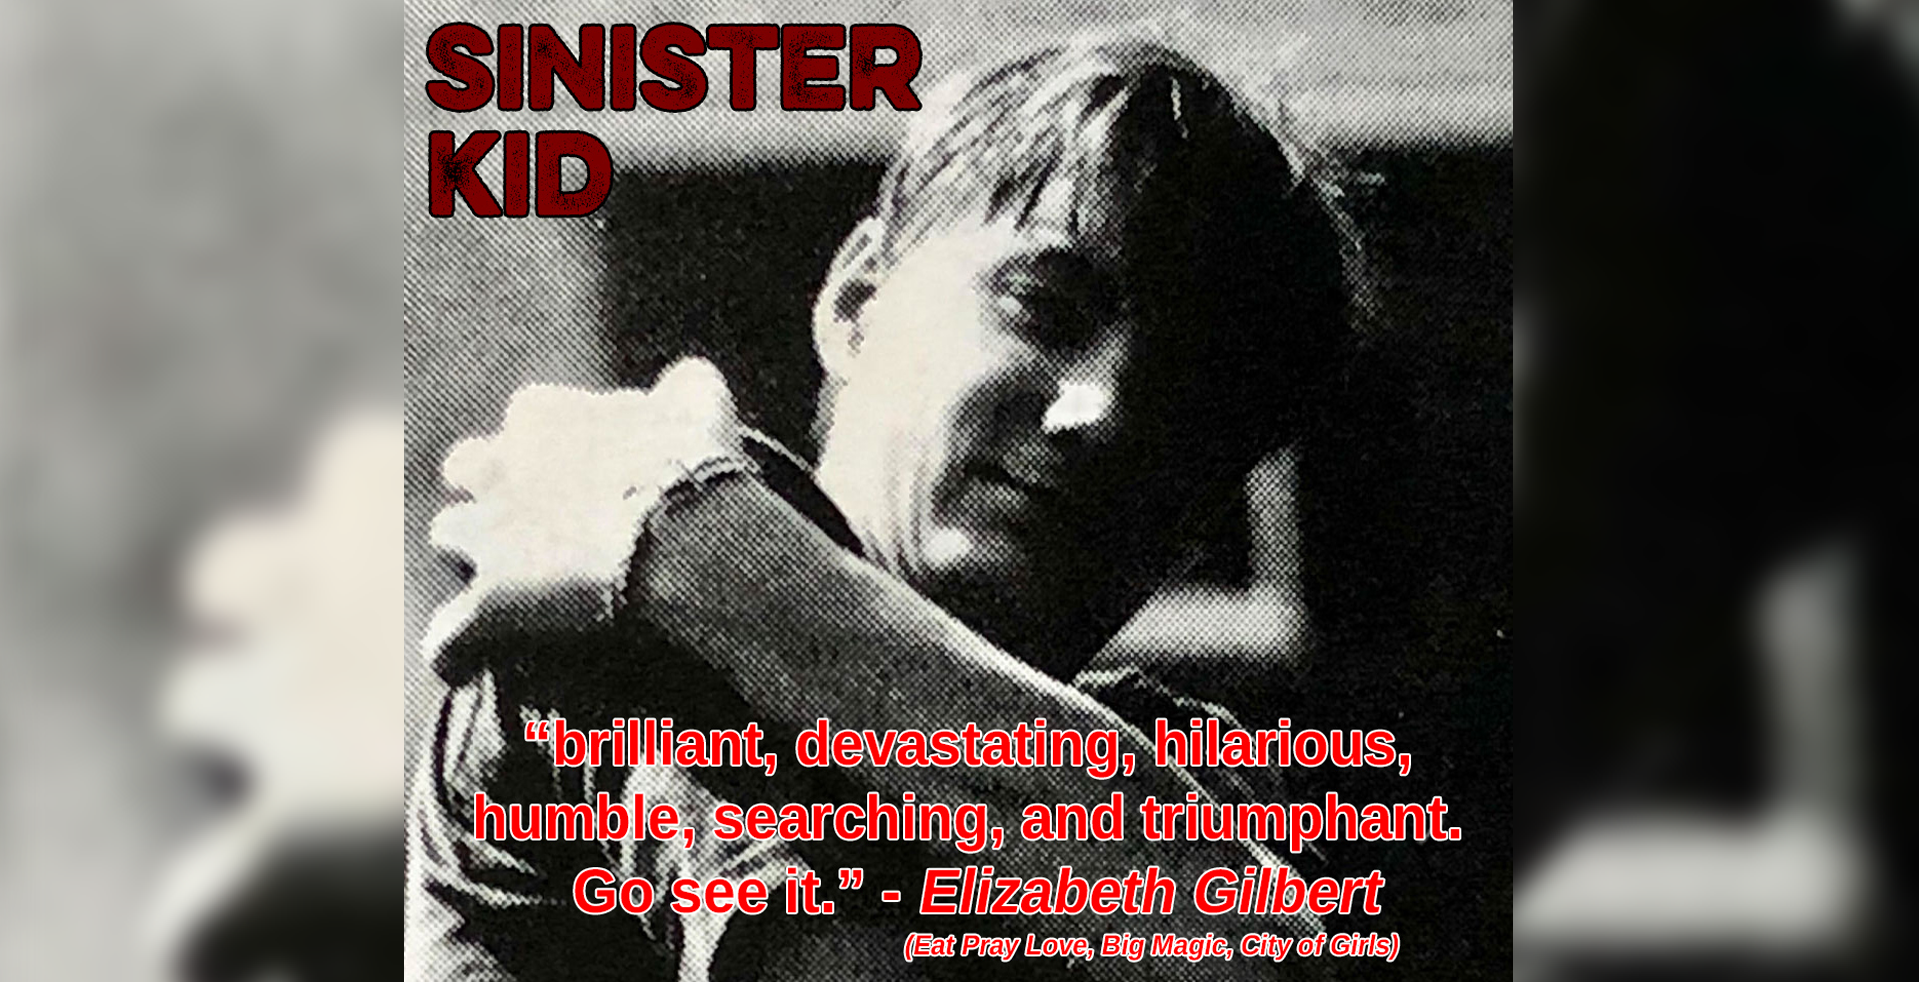 Patrick McCartney: "Sinister Kid"